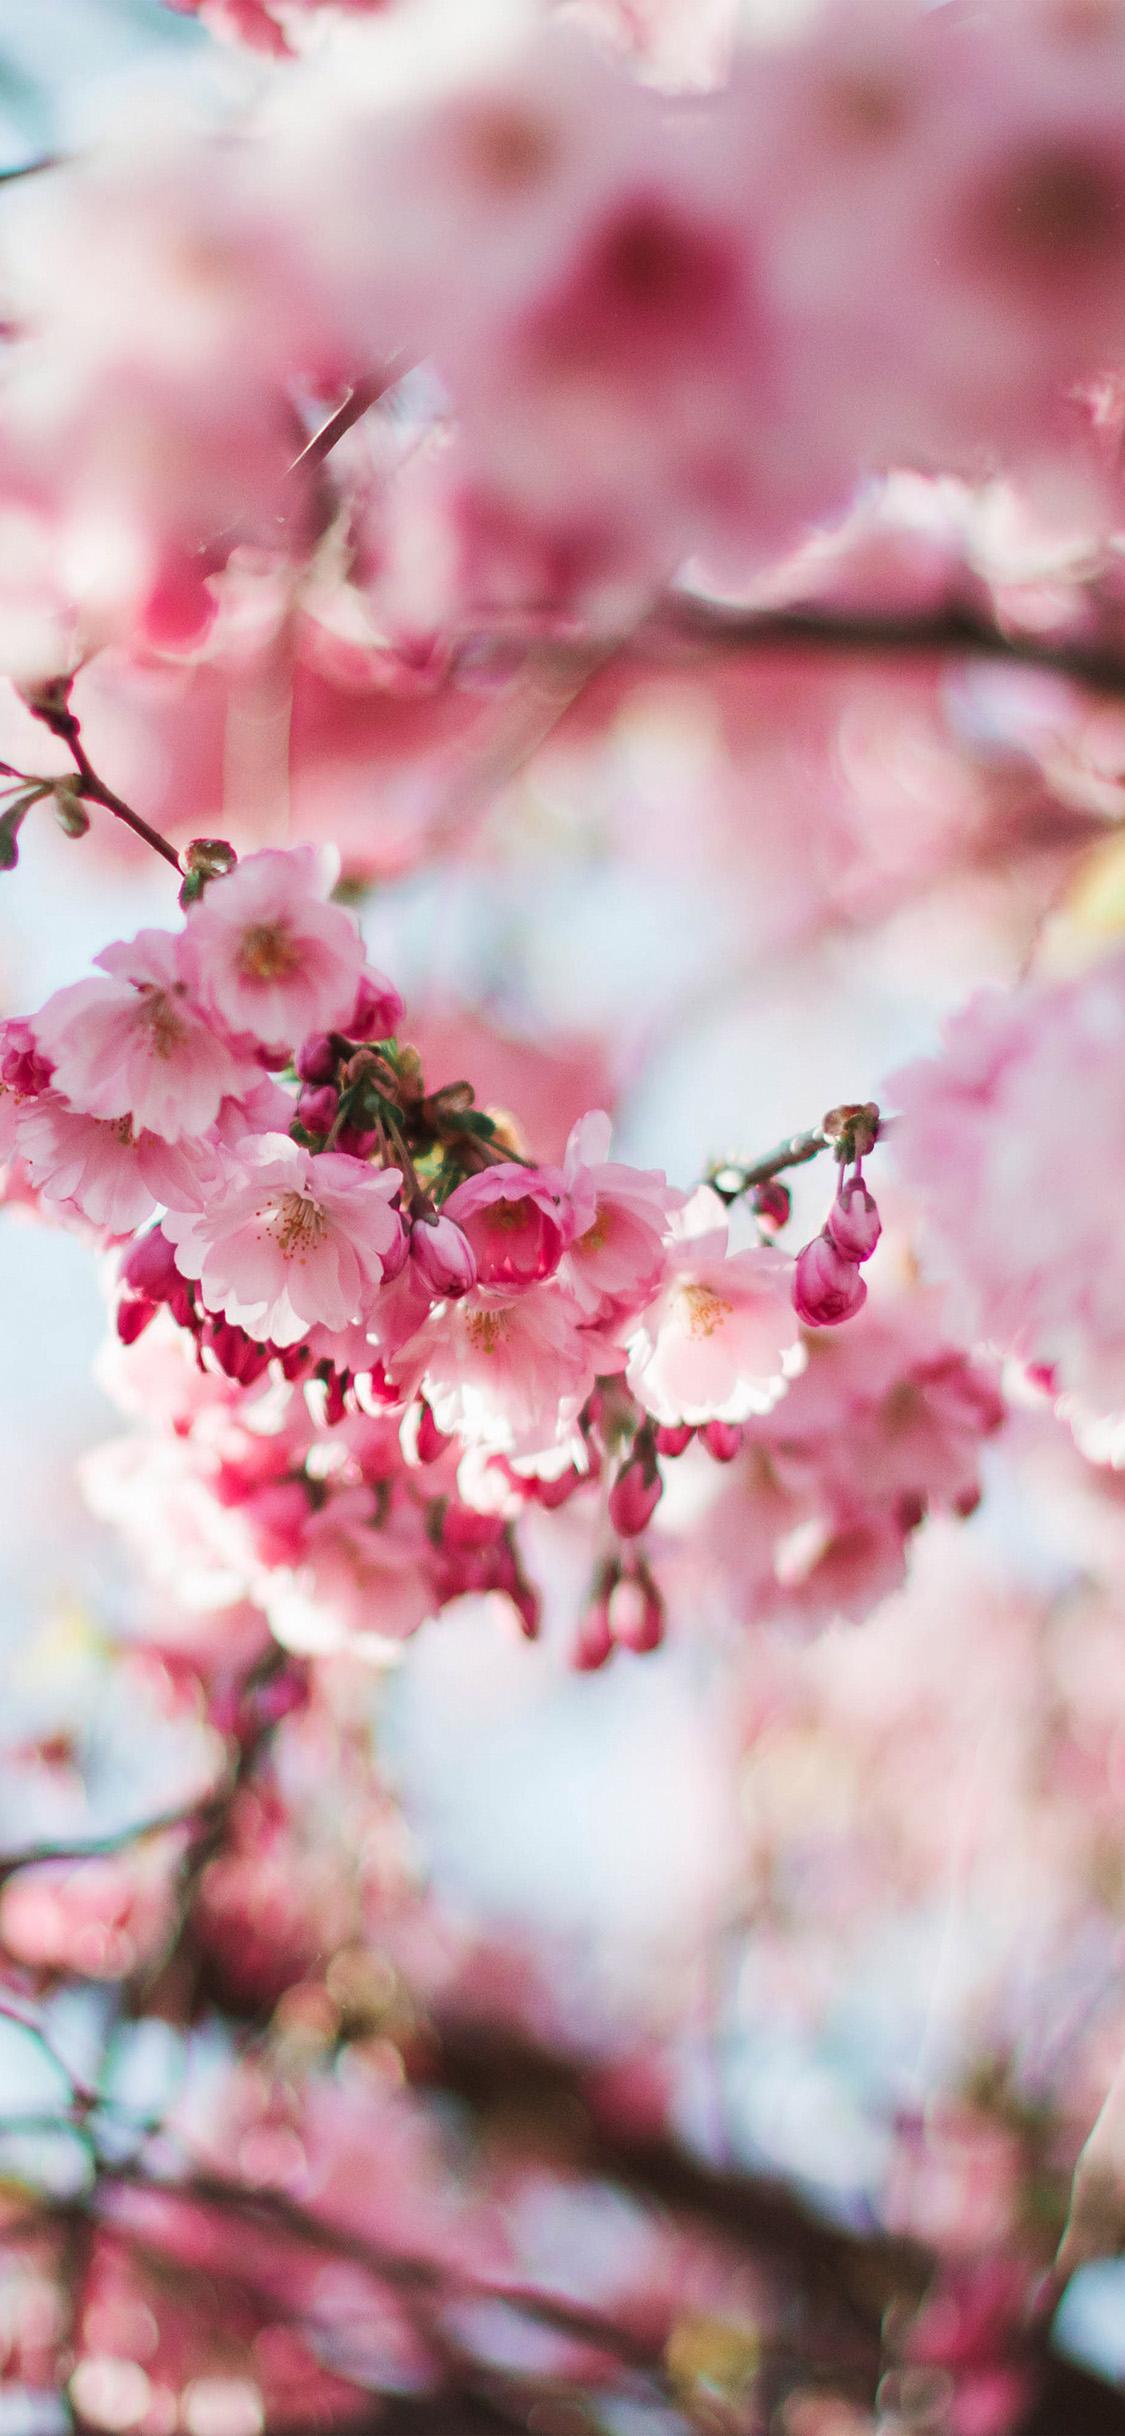 iPhone Wallpaper. Flower, Blossom, Pink, Spring, Cherry blossom